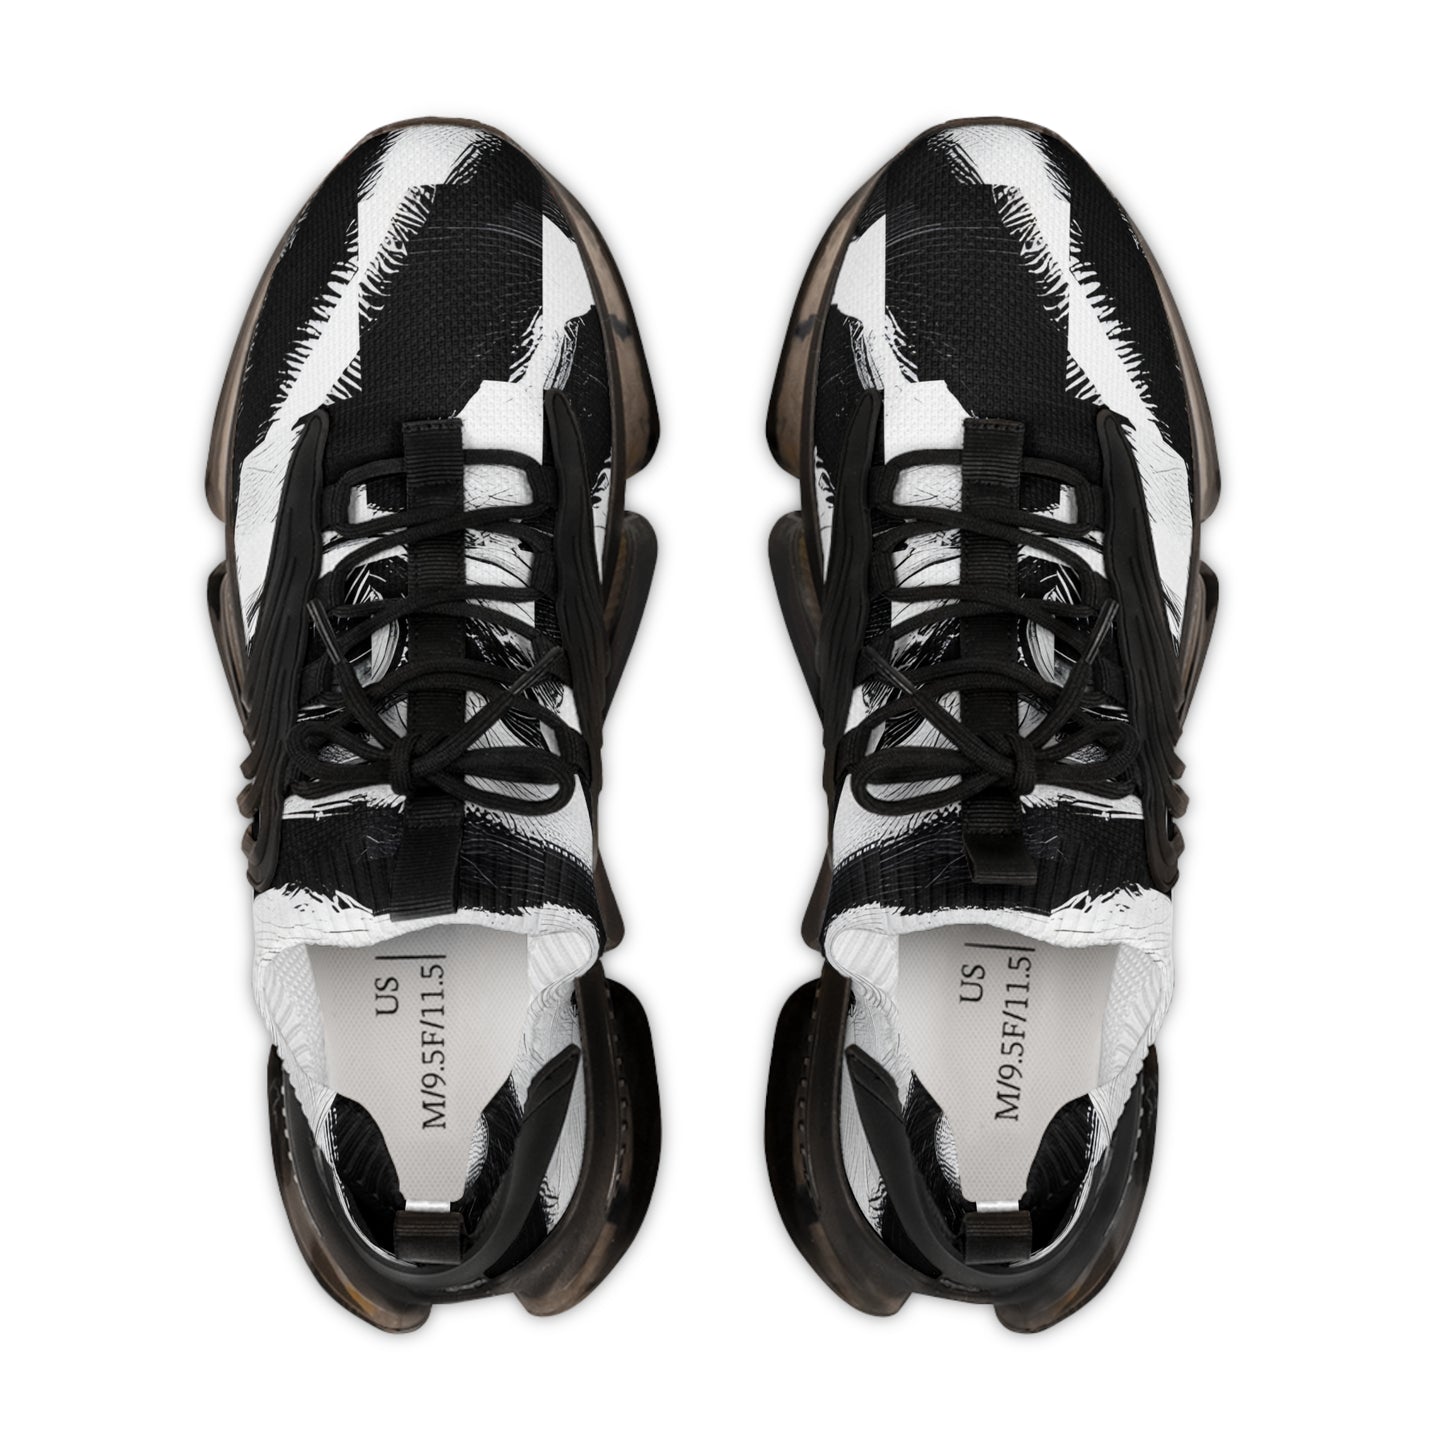 All Over Print Zebra Men's Mesh Sneakers - Zebra Patterns Mens Fashion Sneakers